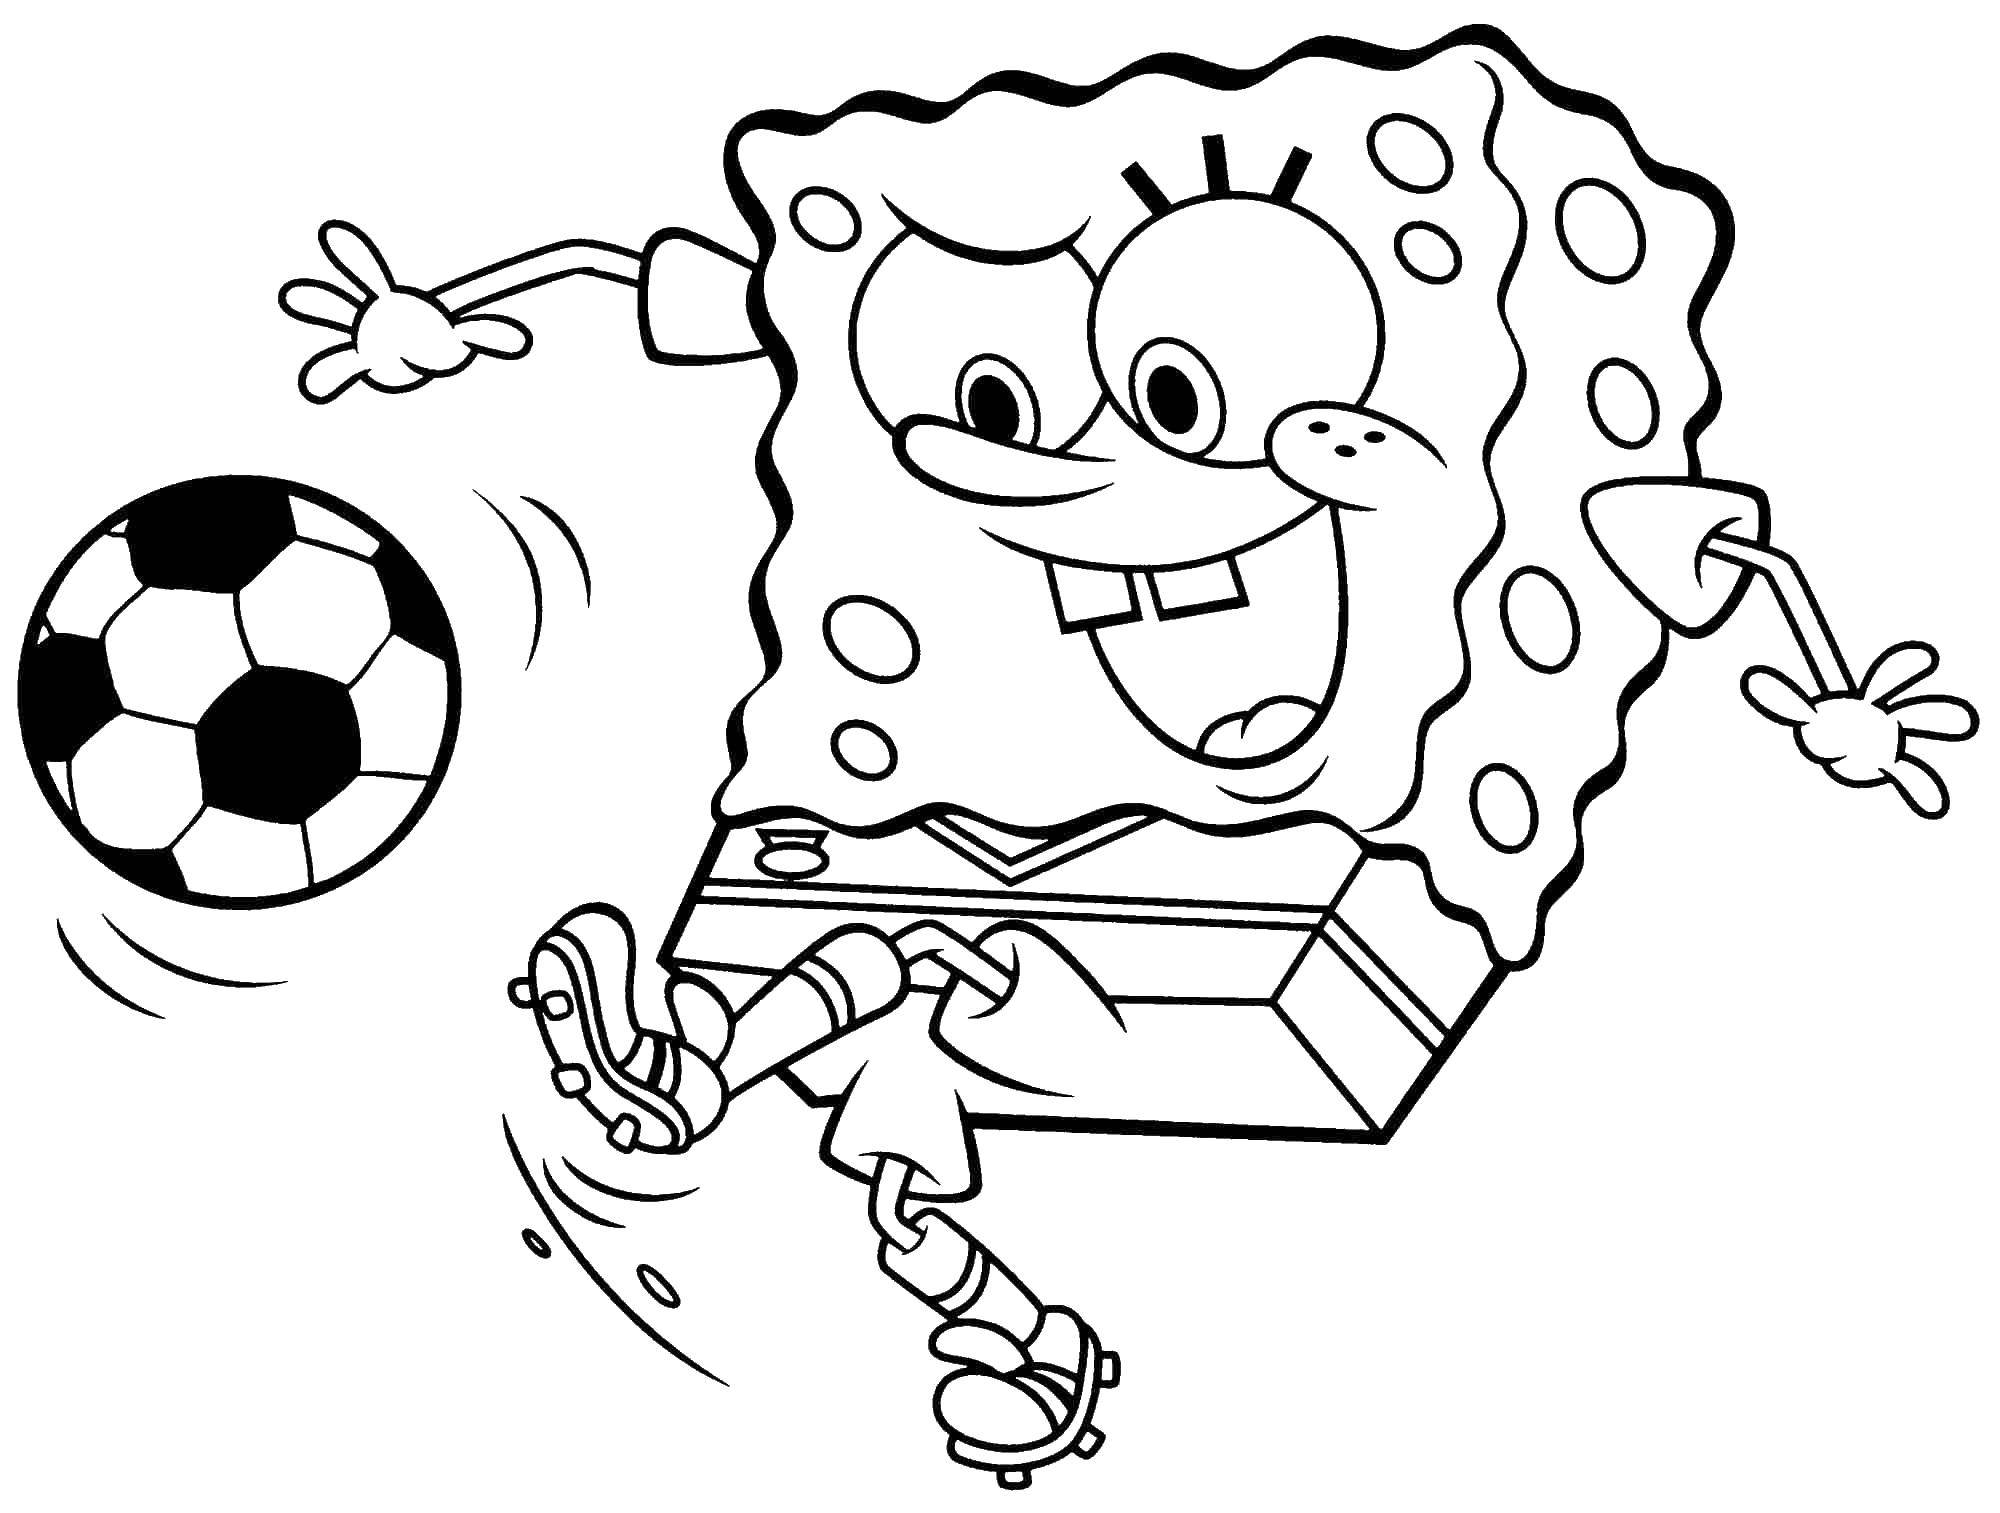 Coloring Spongebob football player. Category Spongebob. Tags:  Sports, soccer, ball, game.